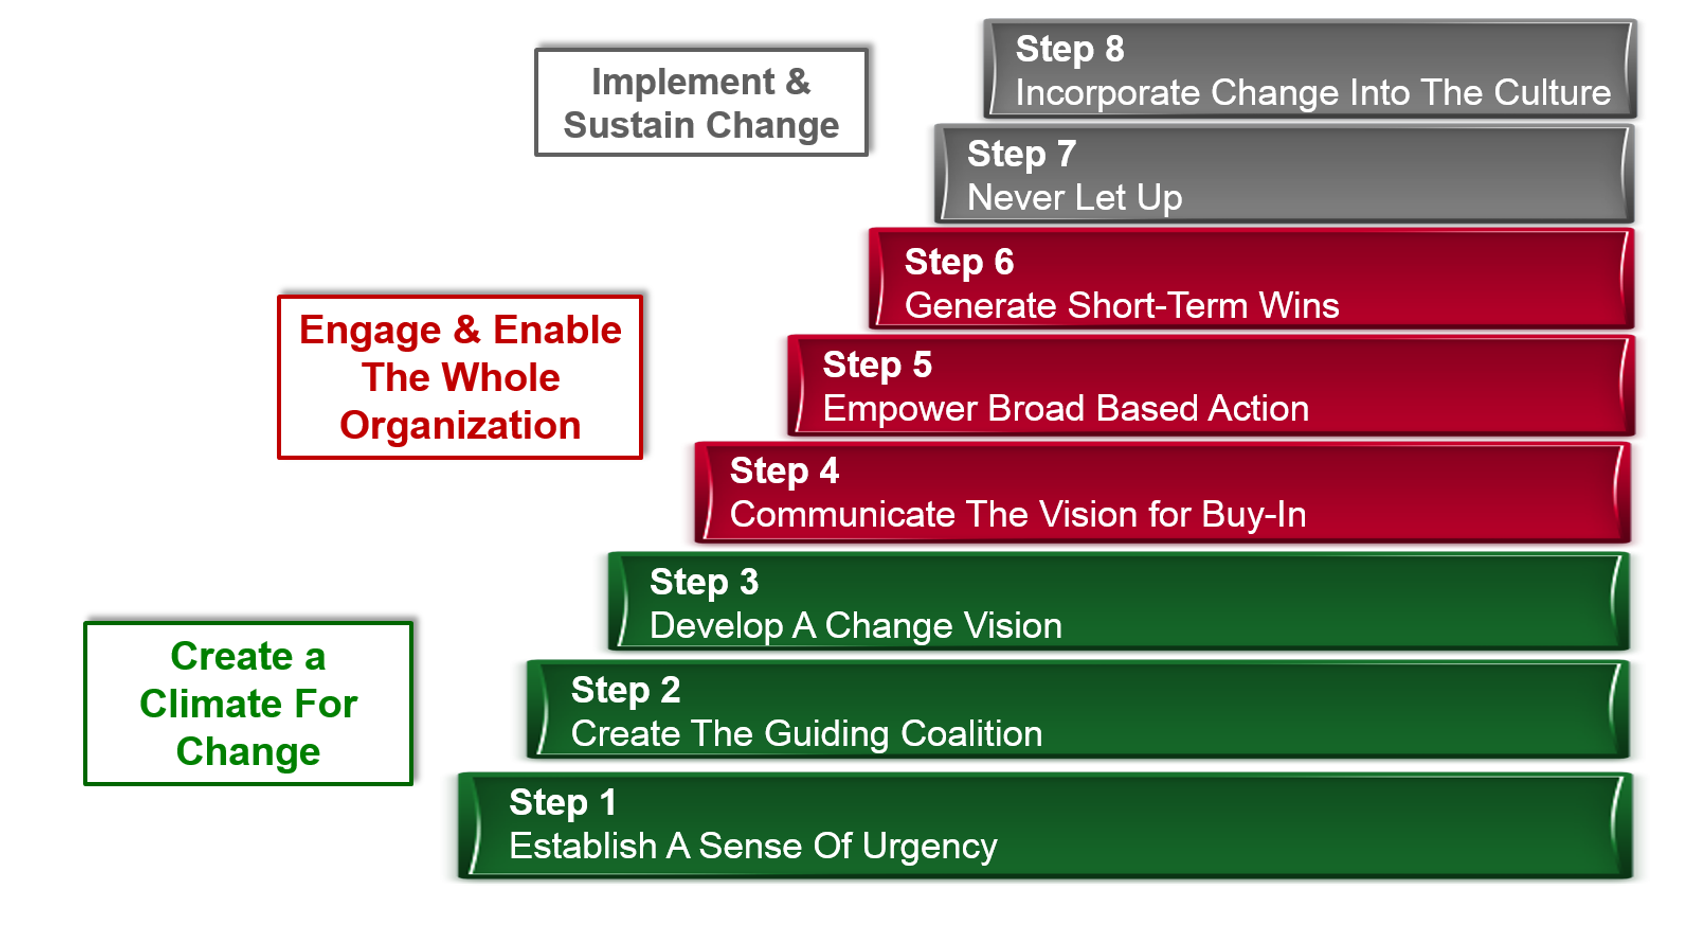 Major Approaches & Models of Change Management